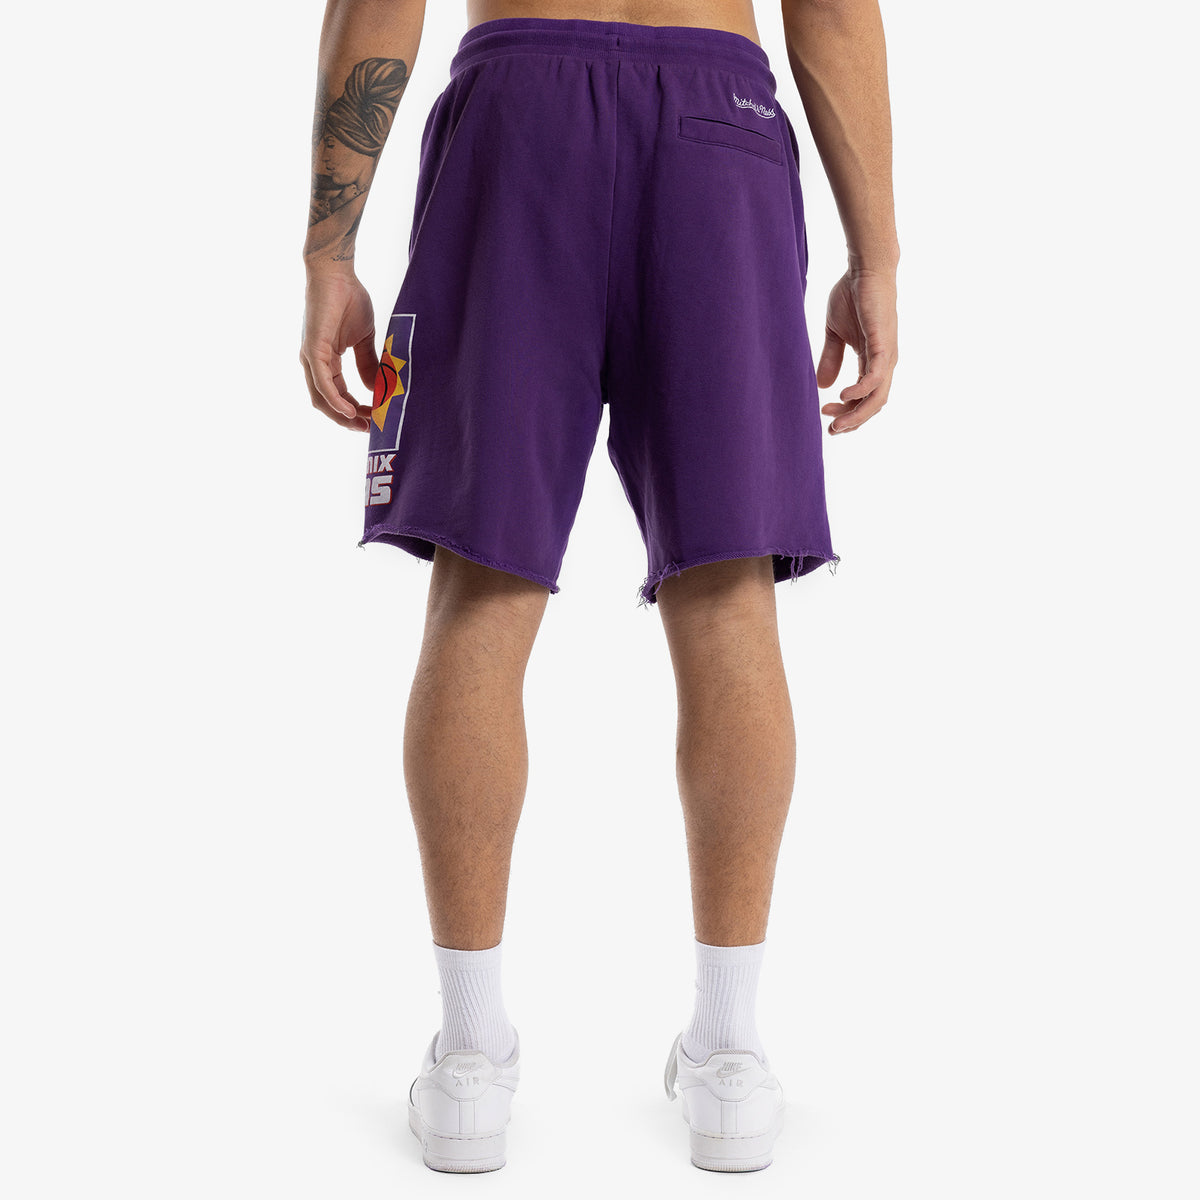 Phoenix Suns Off Season Shorts - Purple